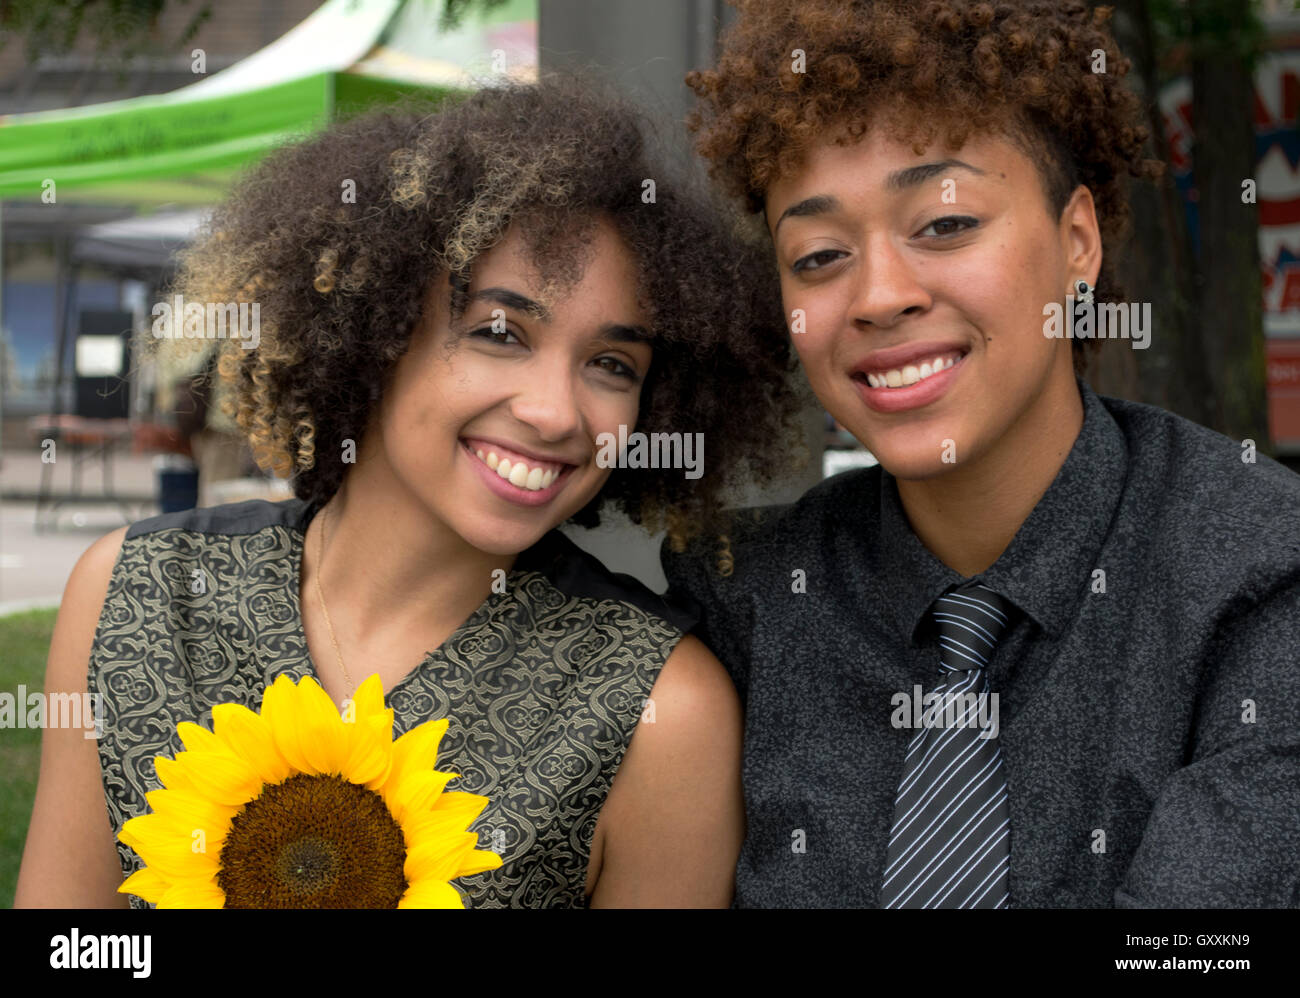 African American woman alternative lifestyle couple Stock Photo